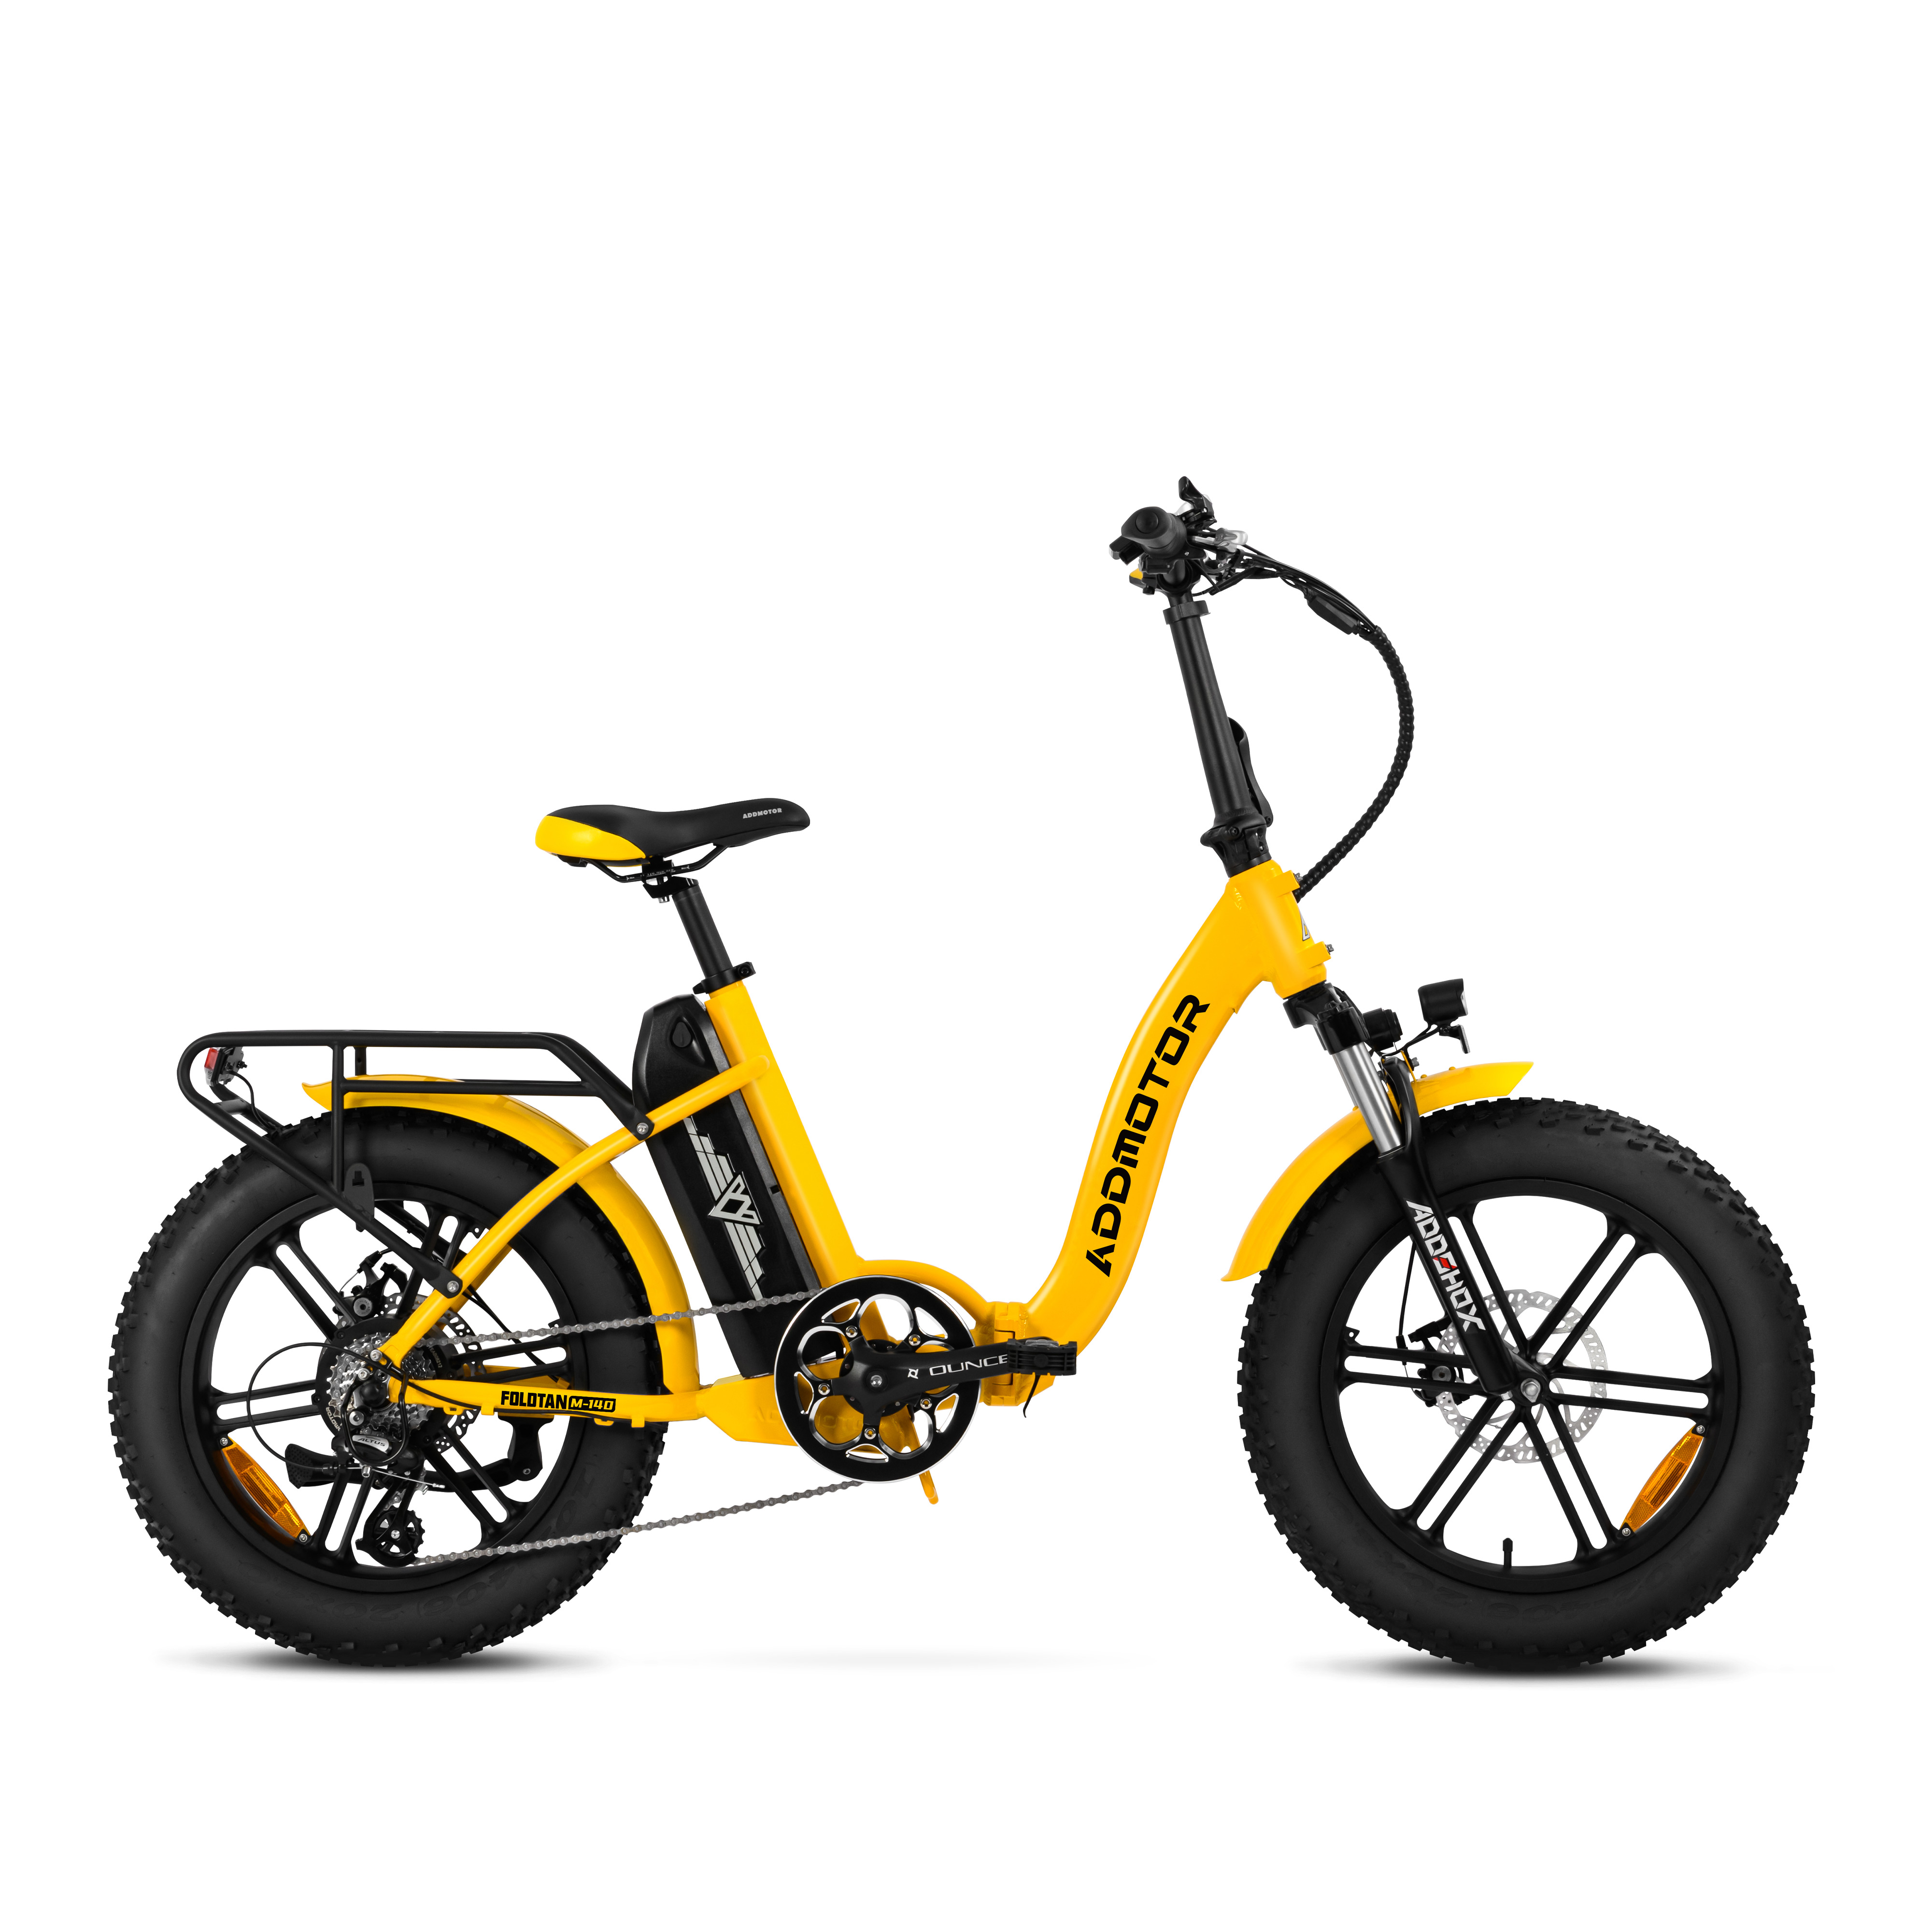 Addmotor Foldtan M-140 E-Bike | Fat Tire Comfortable Folding Electric Bike | Adults Best All-Terrain Electric Bicycles | Yellow